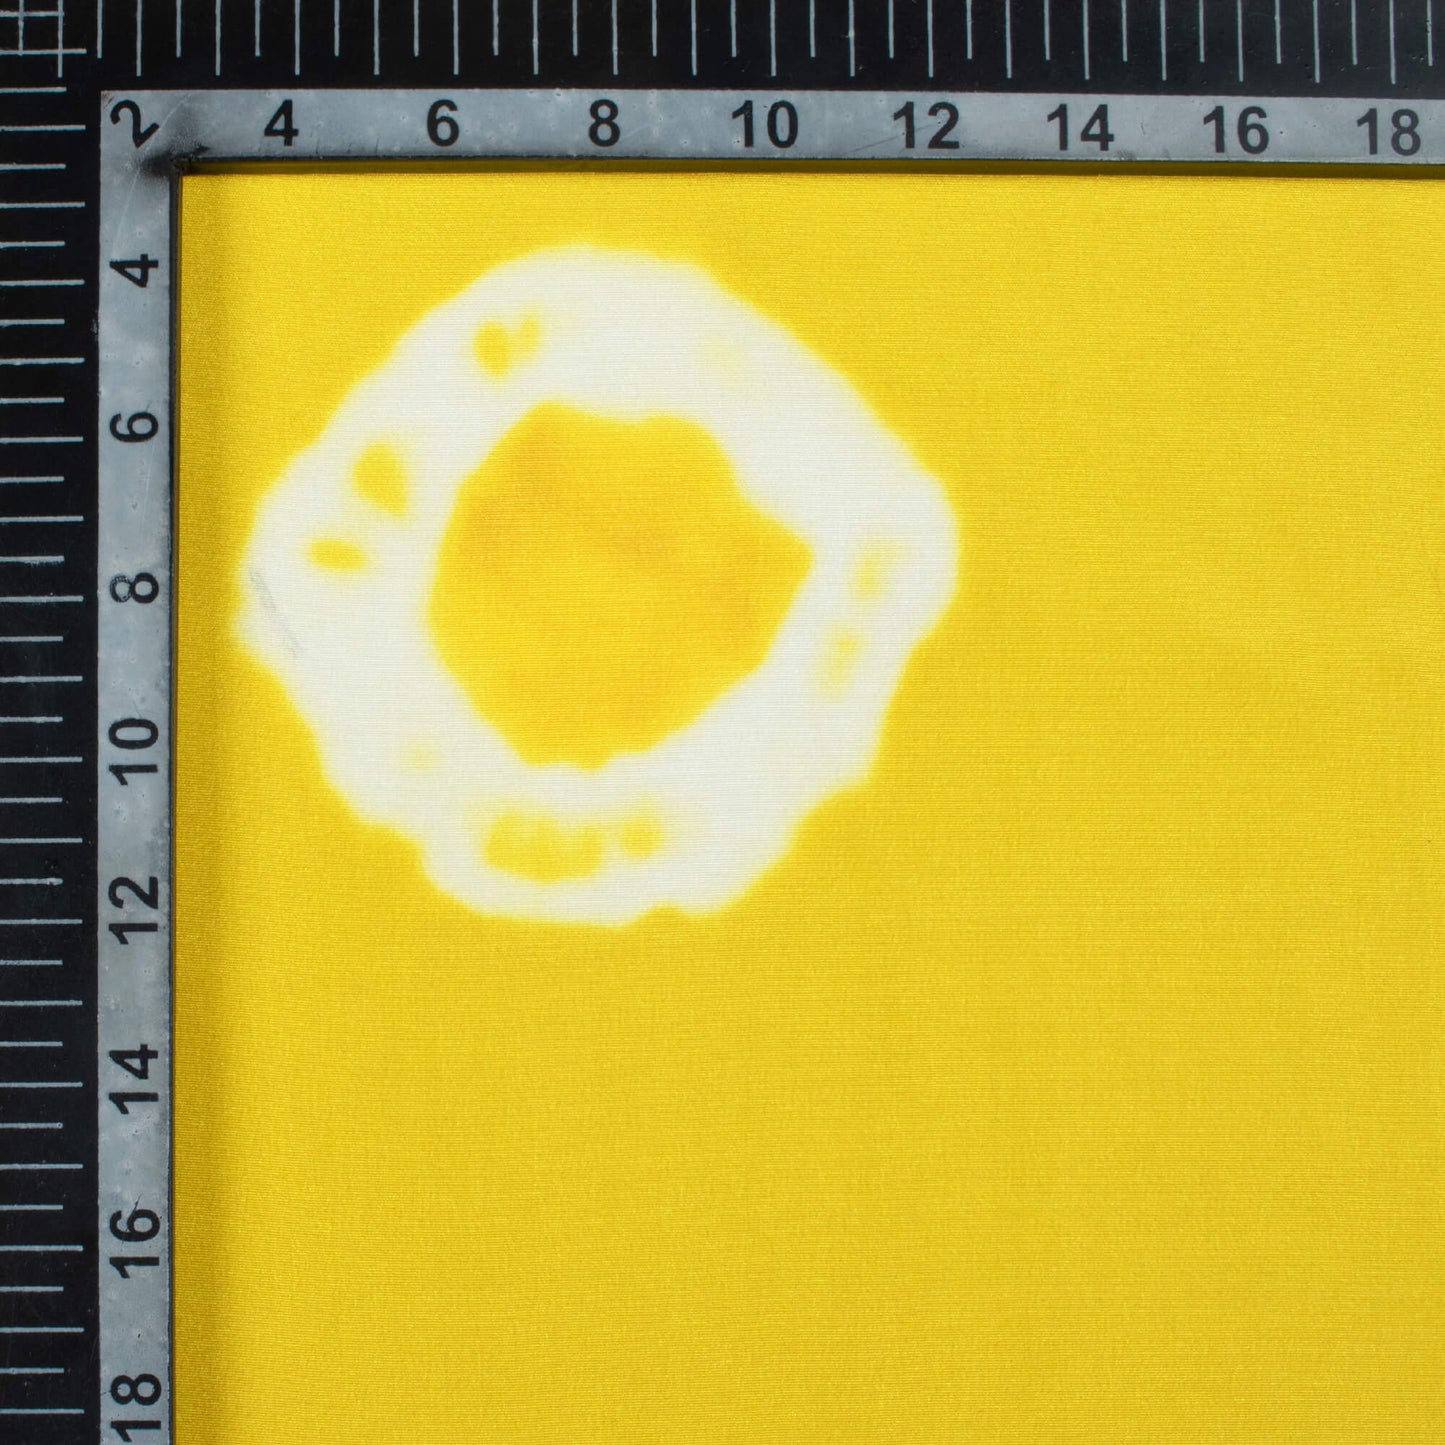 Bumblebee Yellow And White Shibori Pattern Digital Print Crepe Silk Fabric